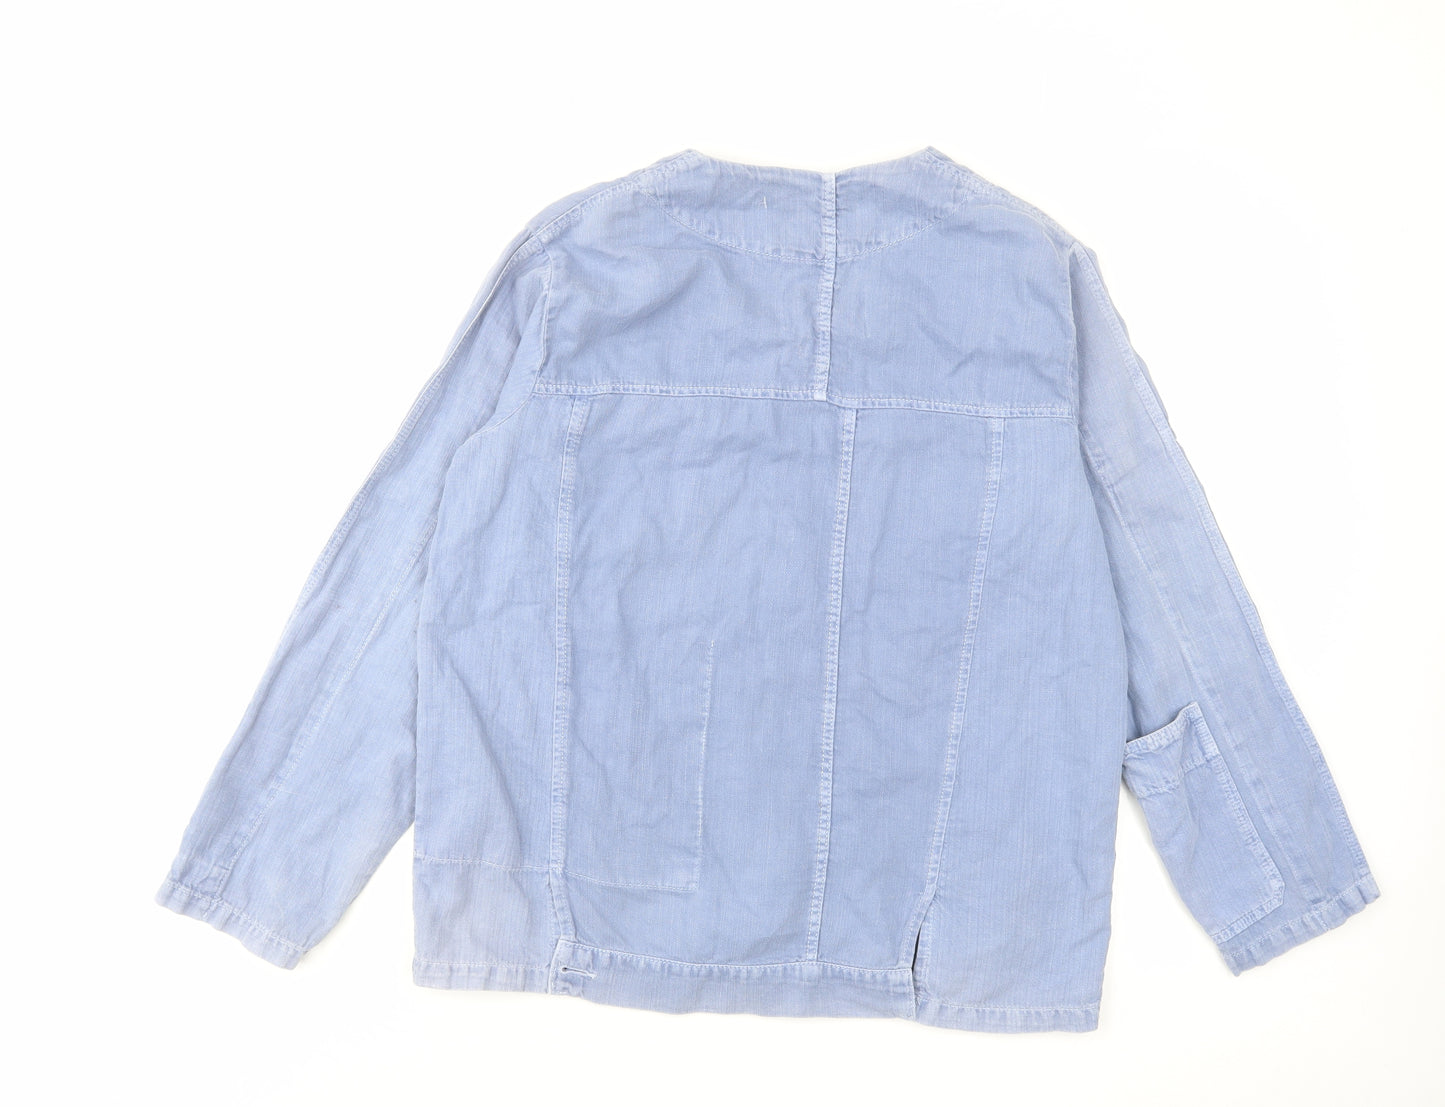 Zara Womens Blue Jacket Size M Button